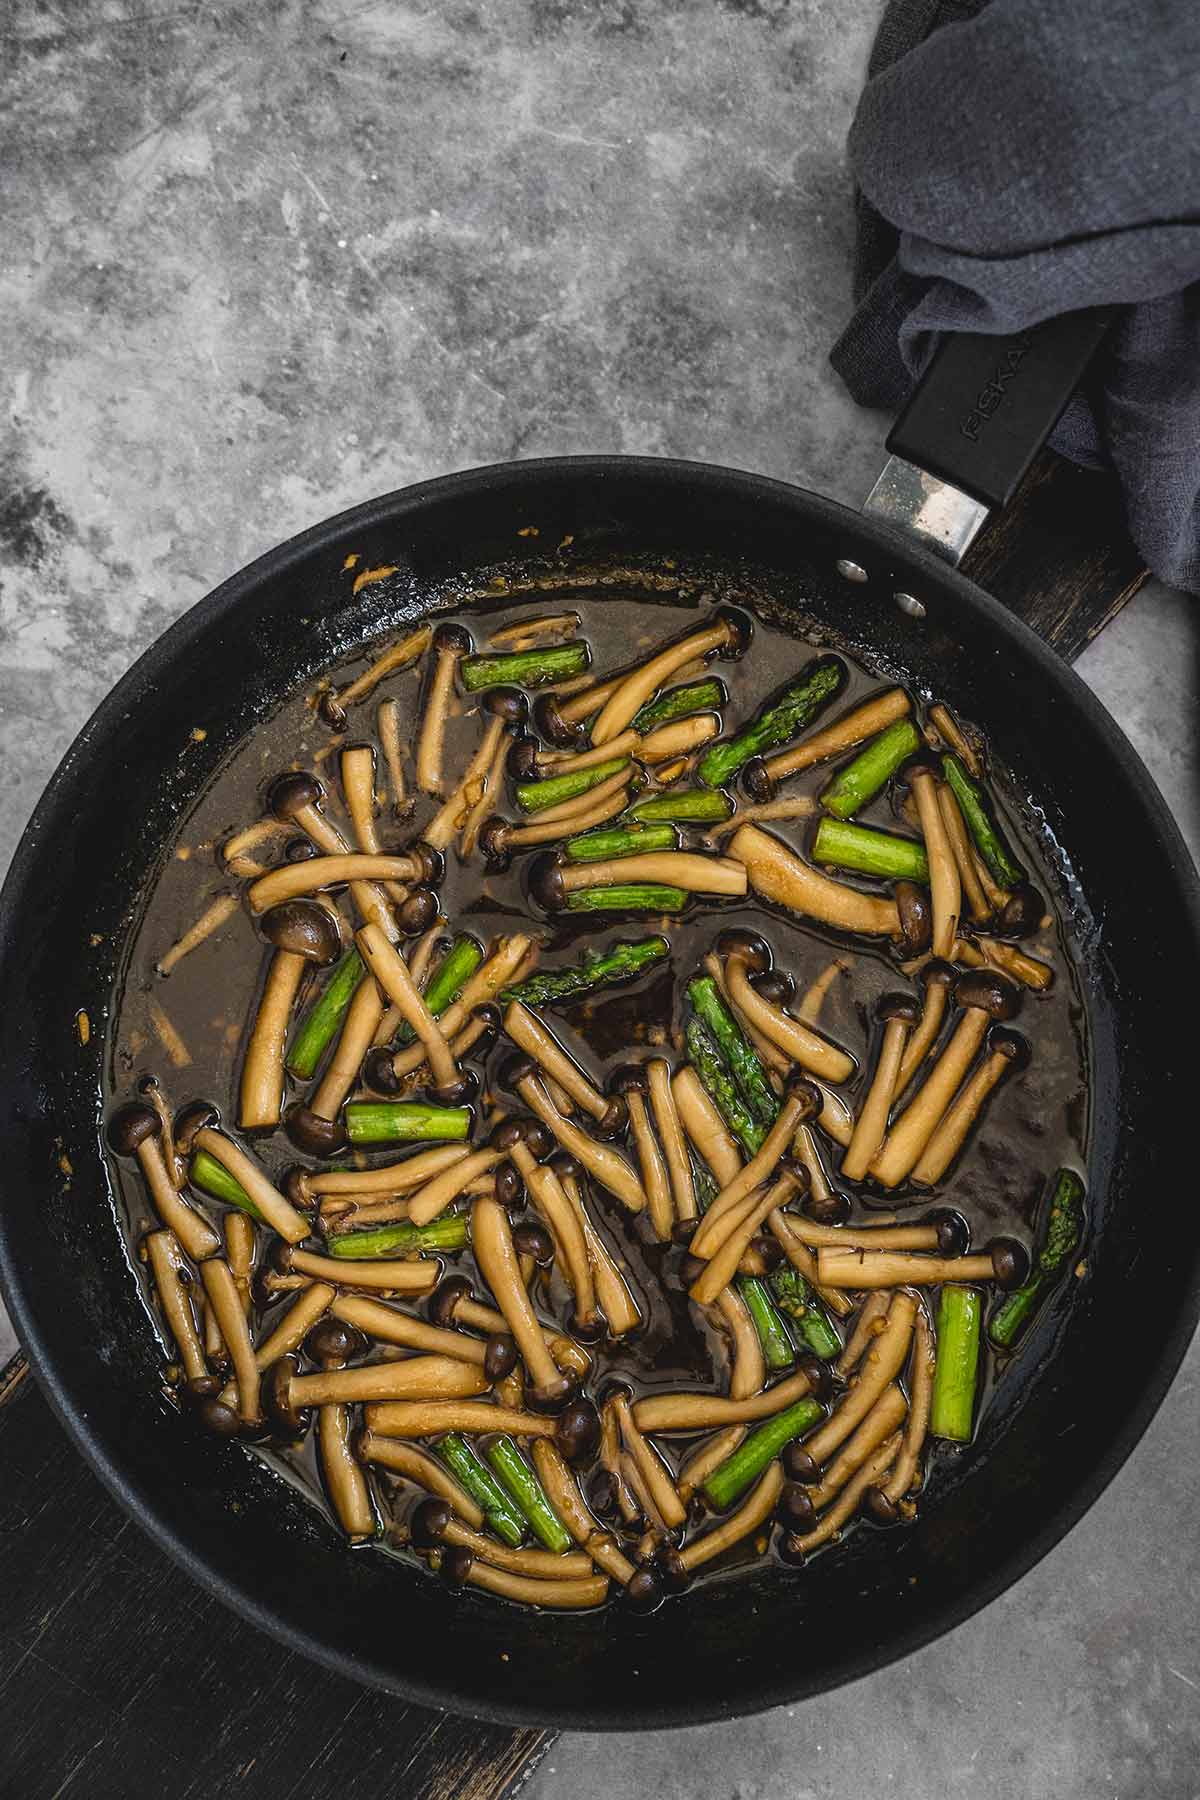 Sauteed-shimeji mushrooms and asparagus